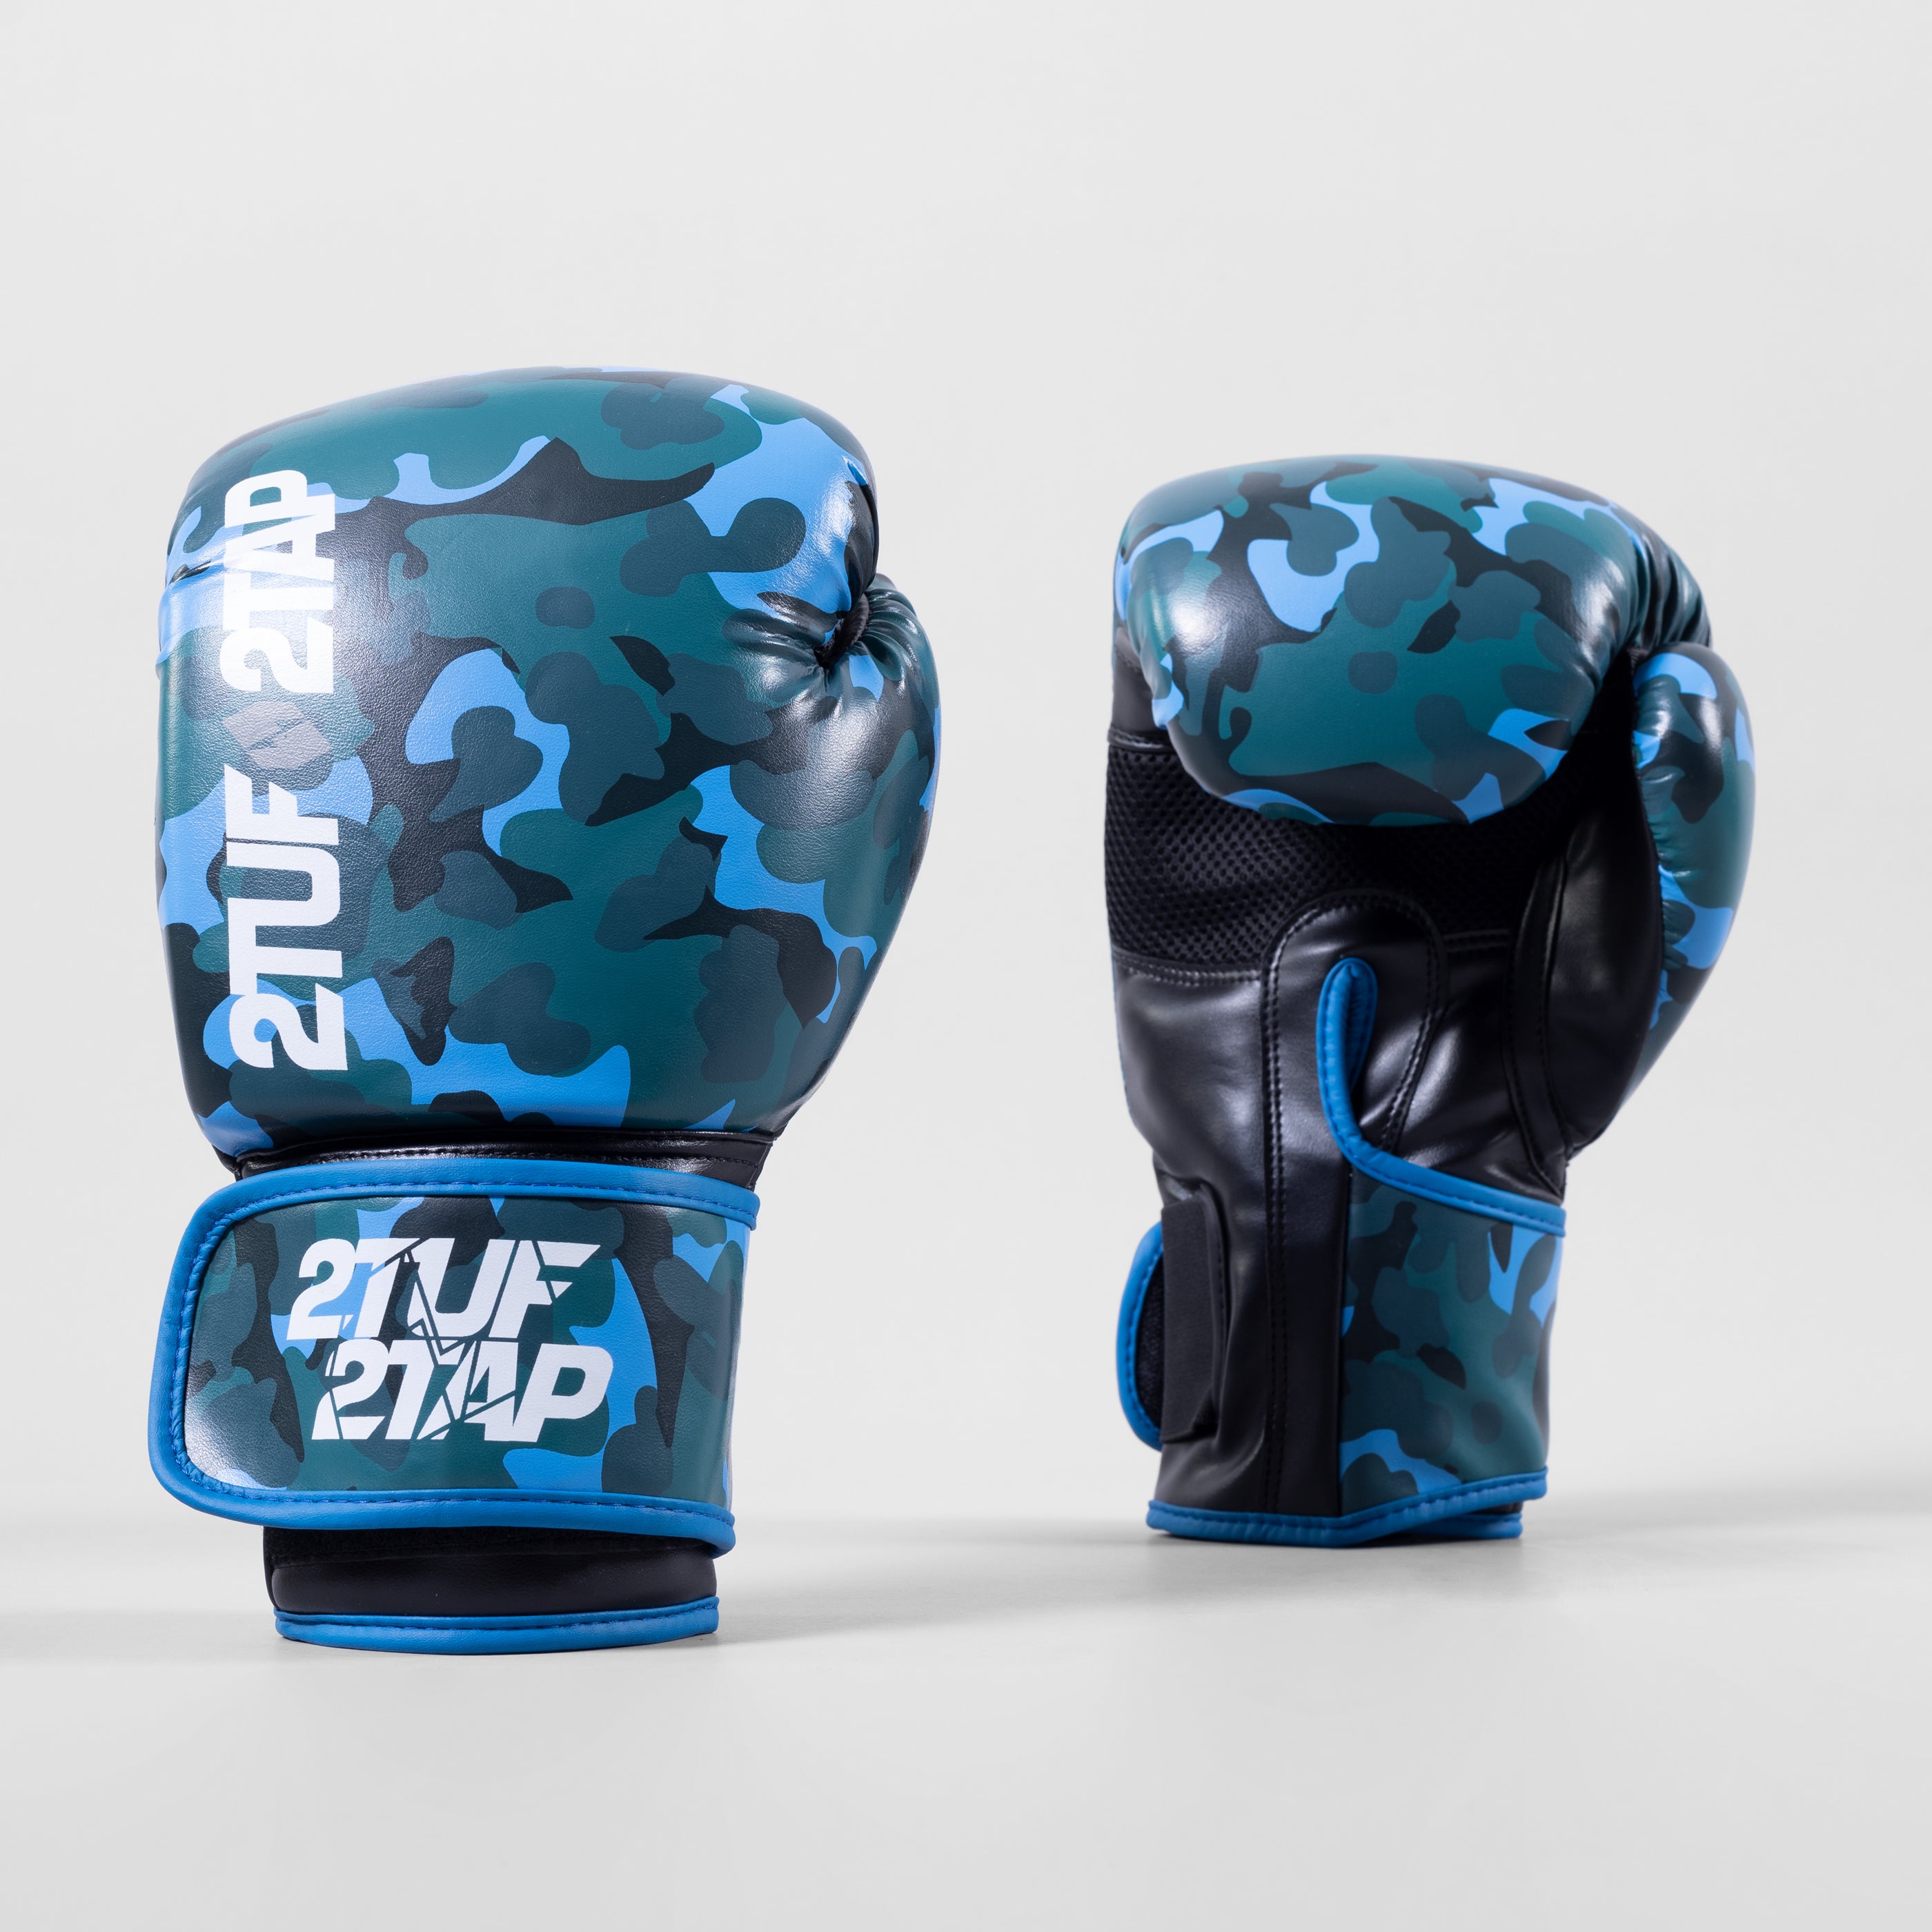 'Urban Camo' Boxing Gloves - Blue/Black 2TUF2TAP